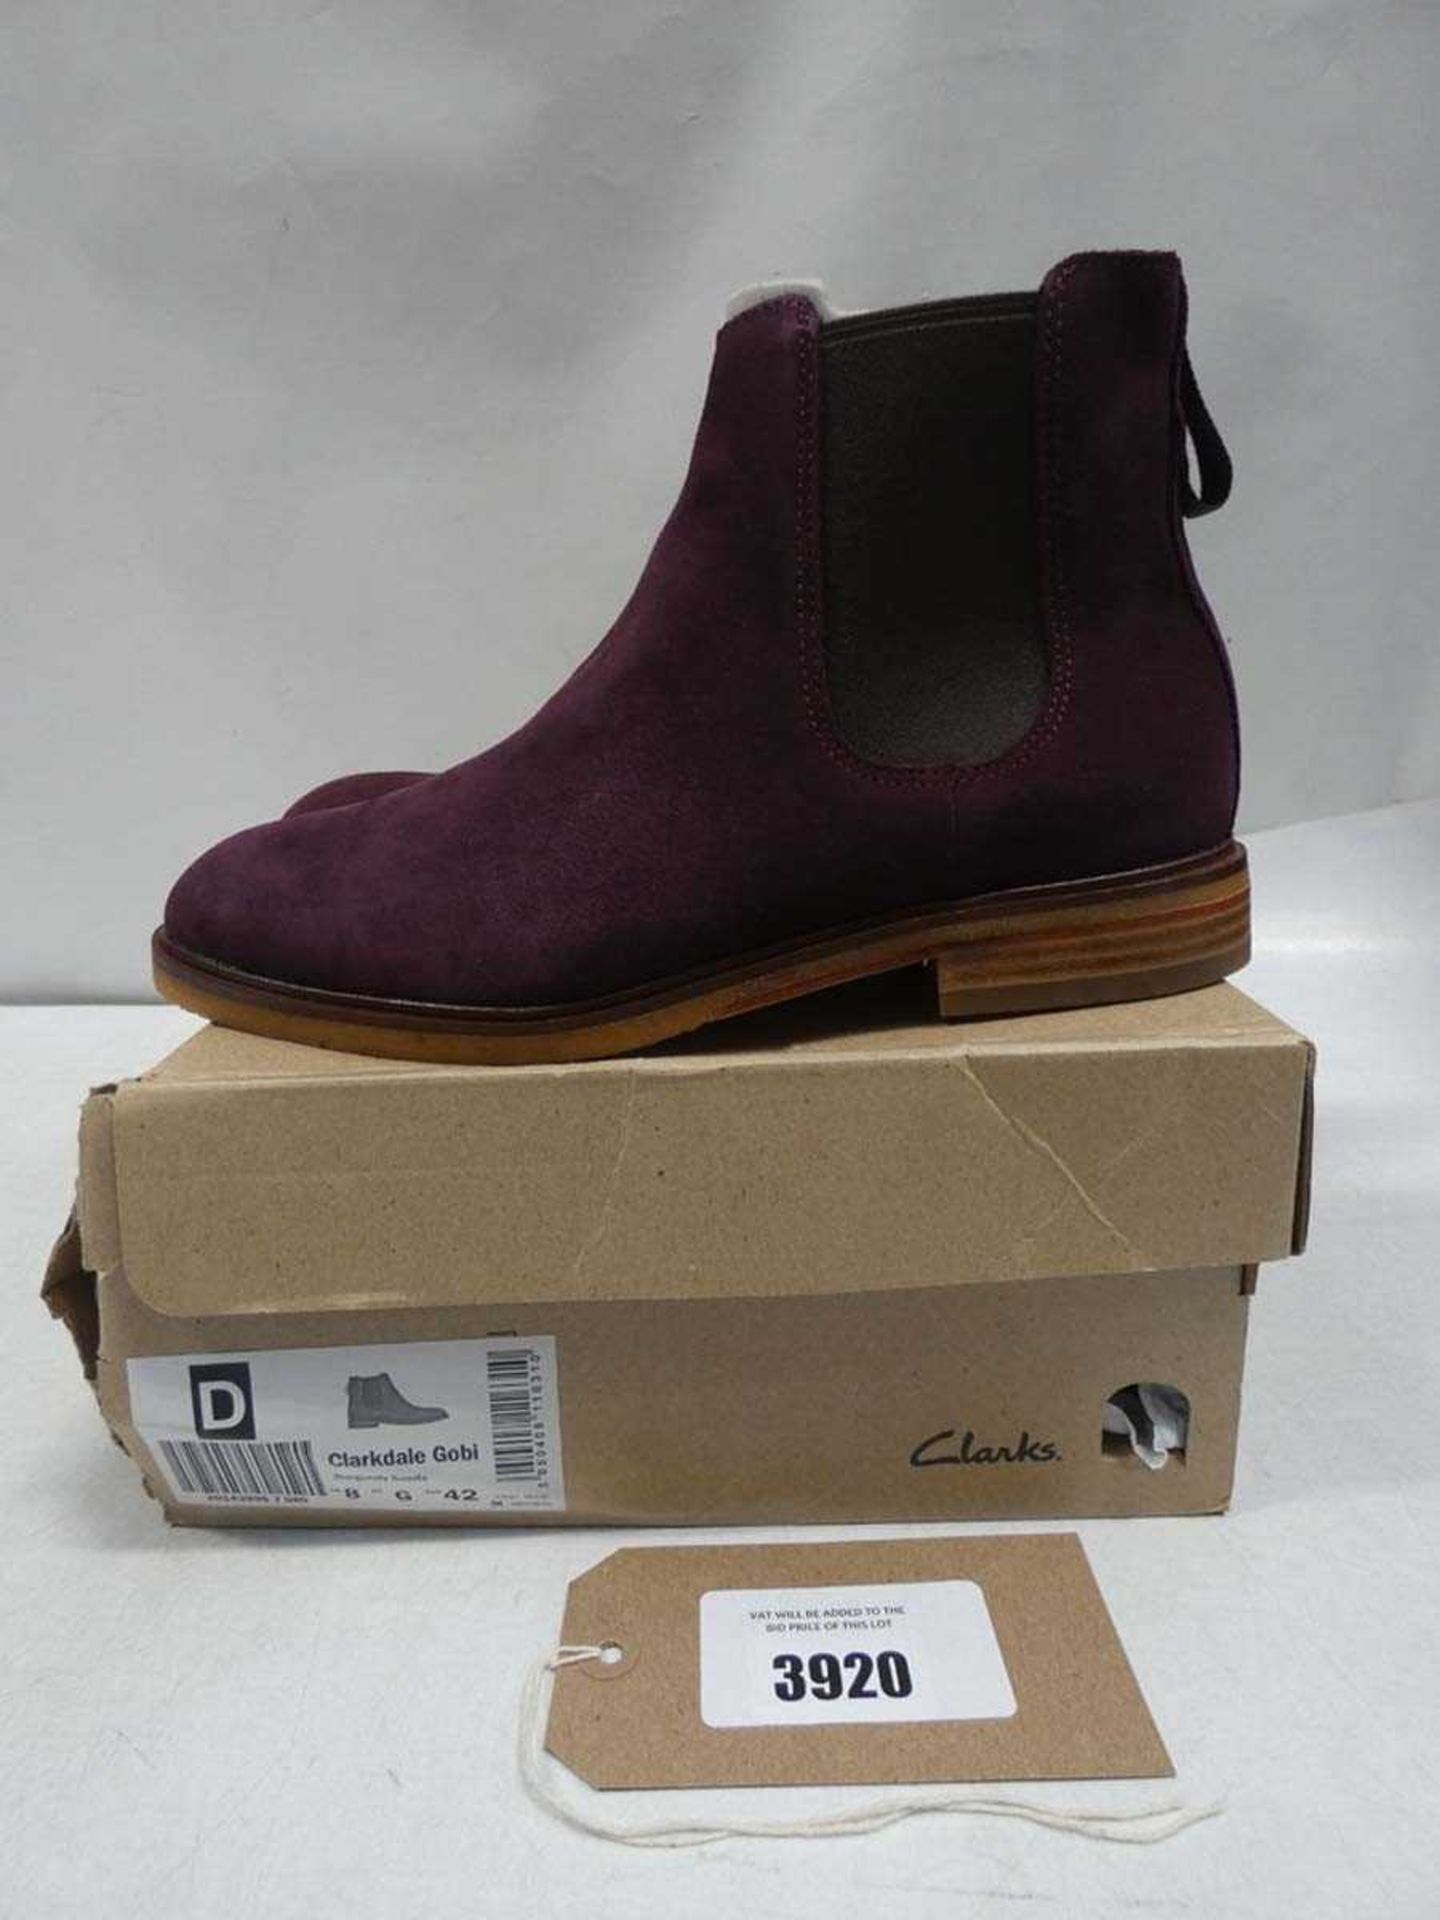 +VAT Clarks Clarkdale Gobi boots size 8 (used)